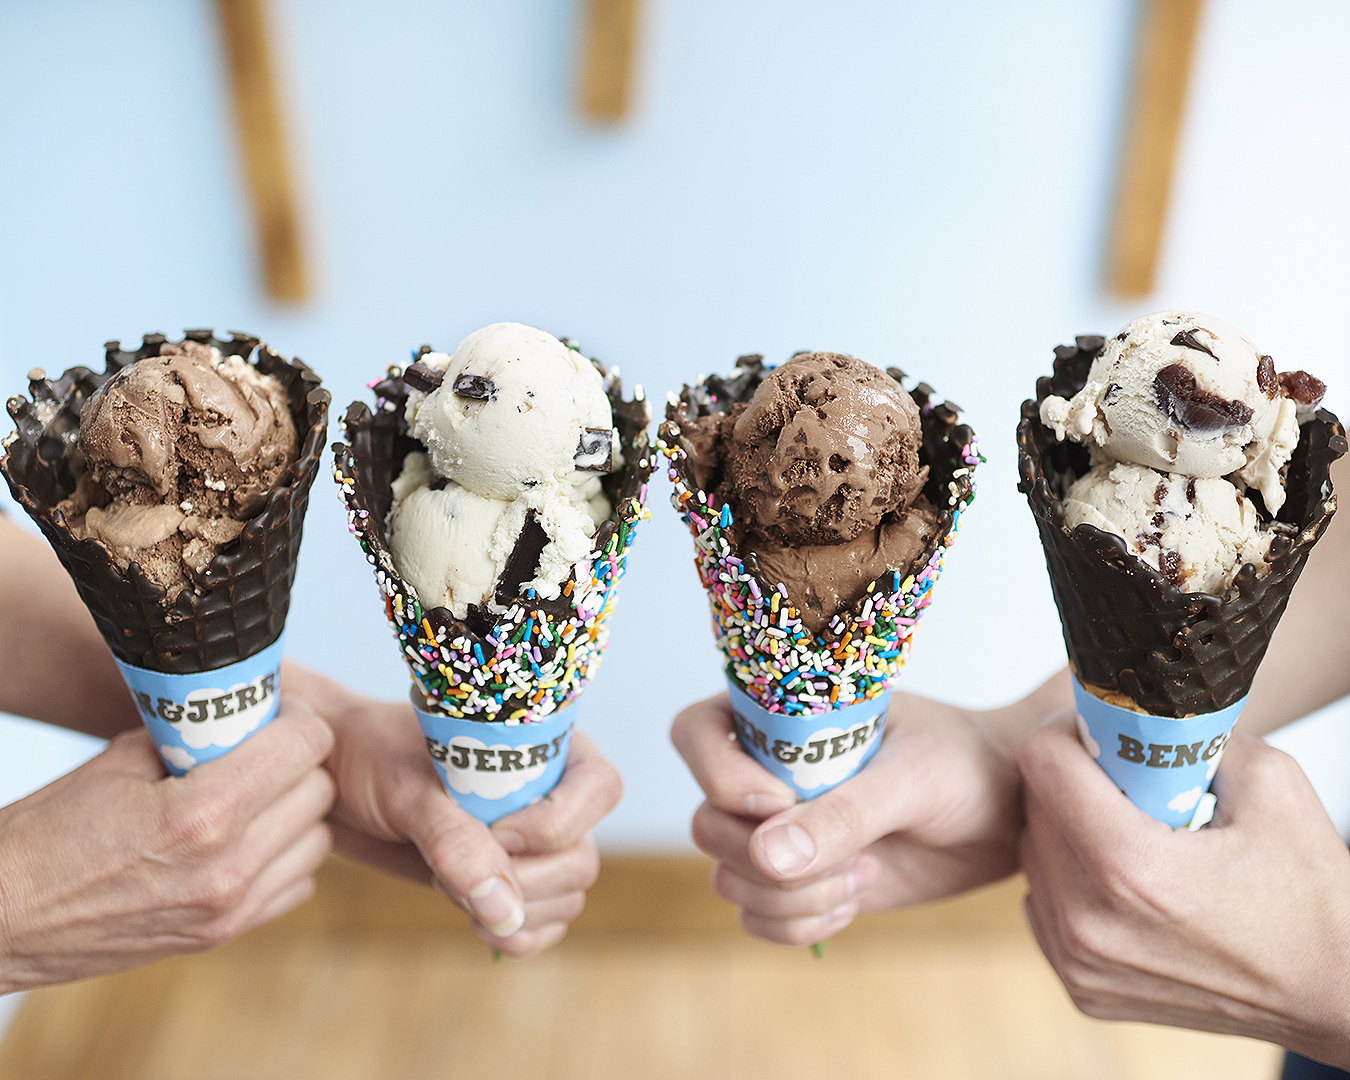 Four cones of delicious Ben & Jerry's ice cream is held aloft.